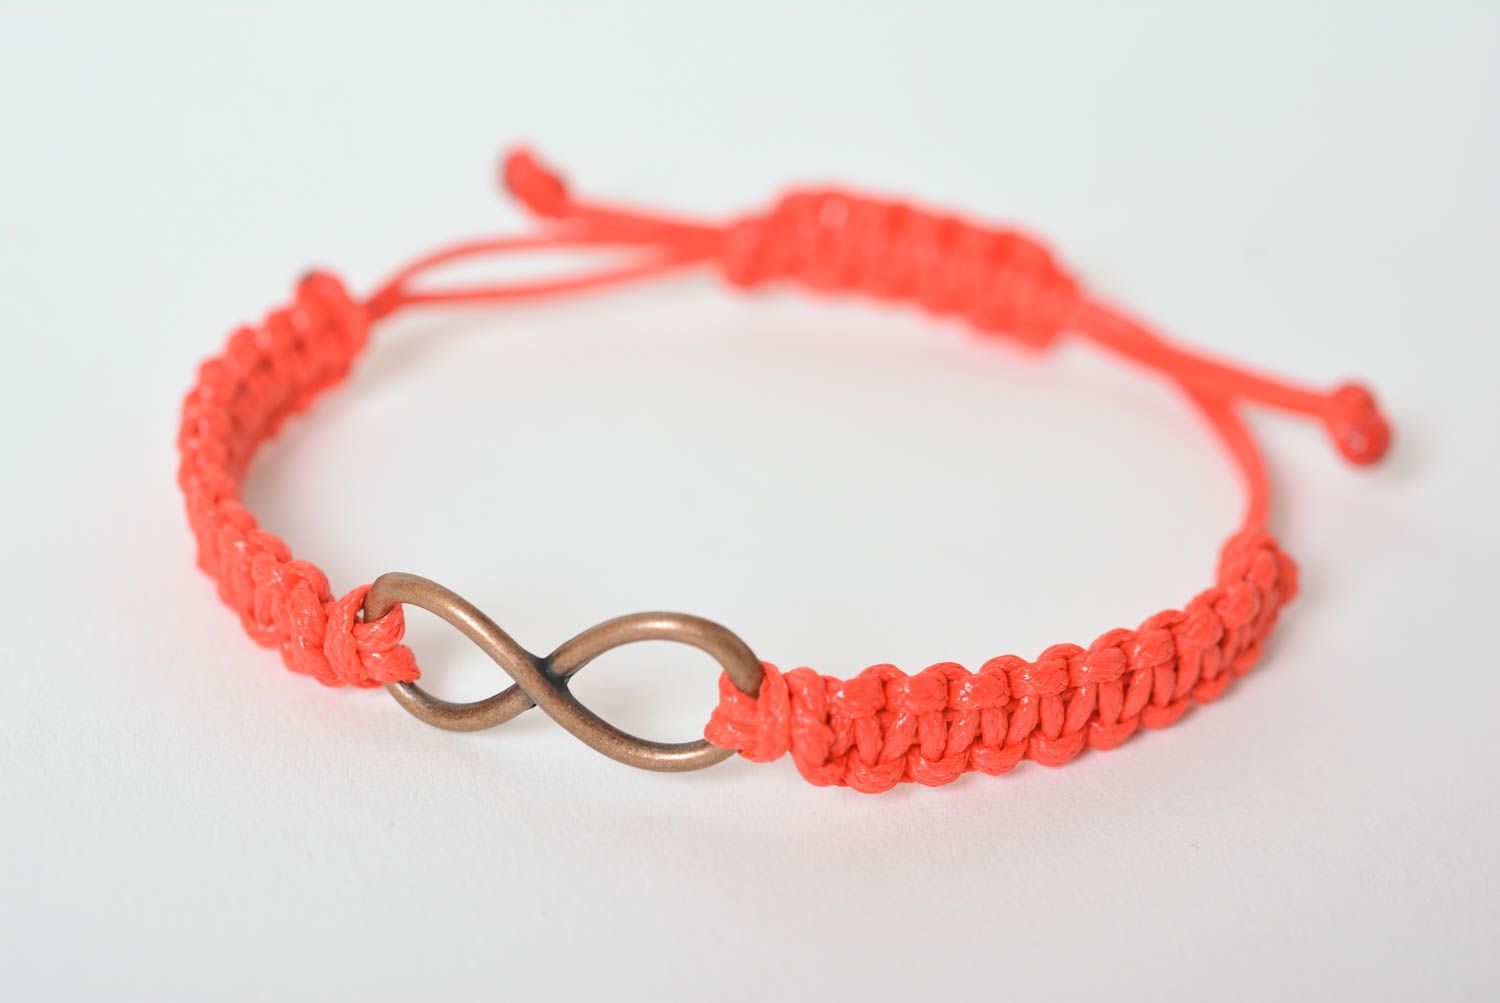 Friendship bracelet homemade jewelry women accessories cord bracelet gift ideas photo 5